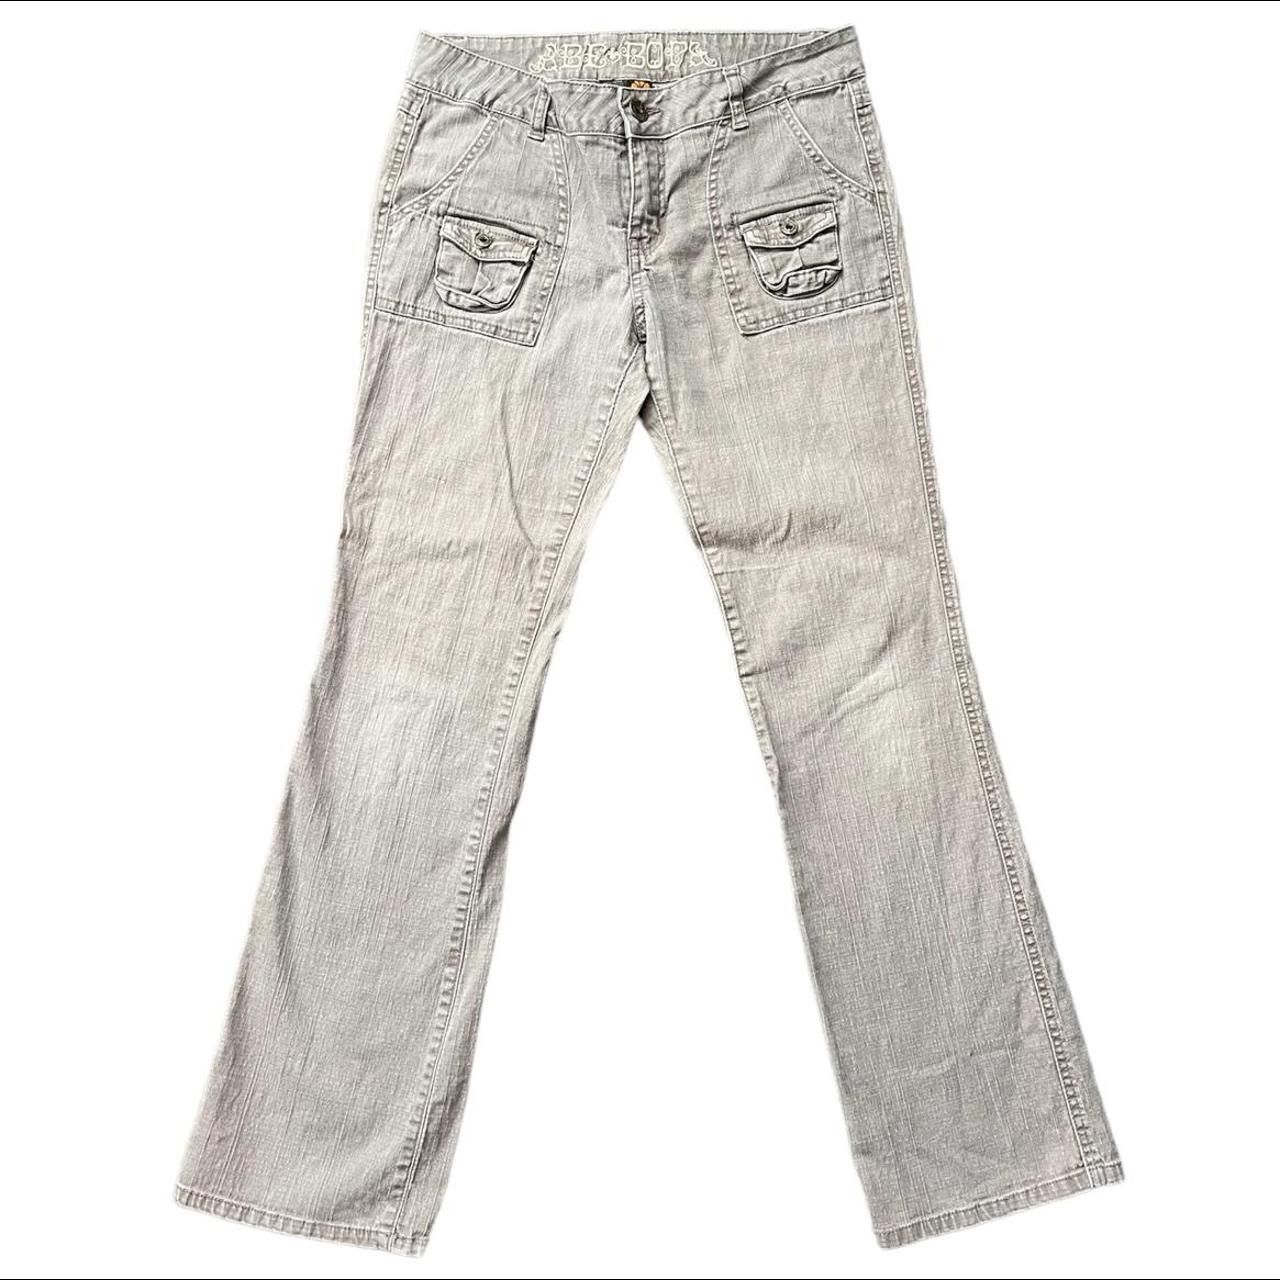 Product Image 1 - 🤎 Y2K Cargo Pants 🤎

Size